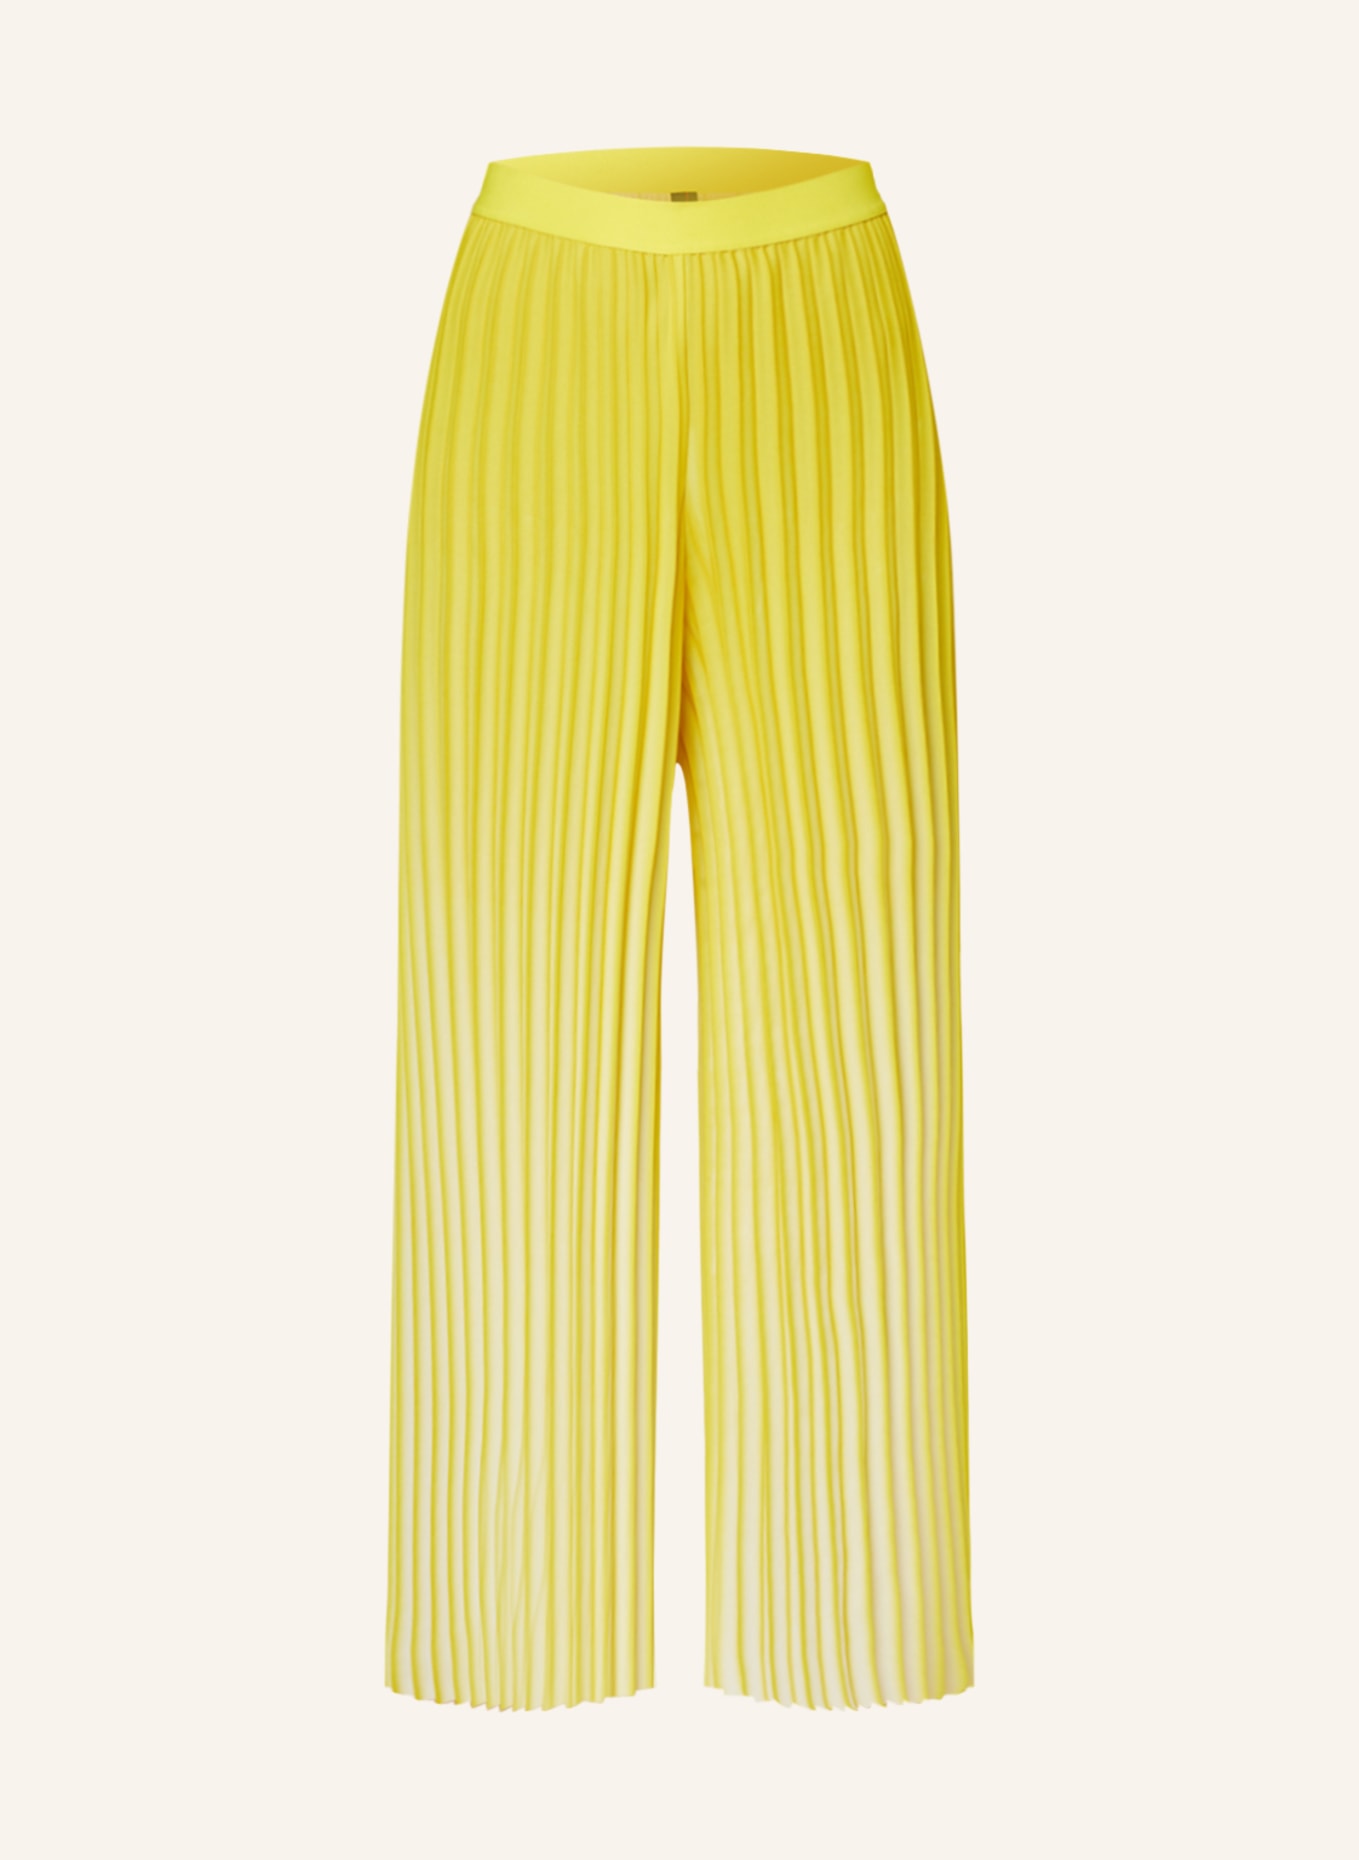 MARC CAIN Hose mit Plissees, Farbe: 431 bright sulphur (Bild 1)